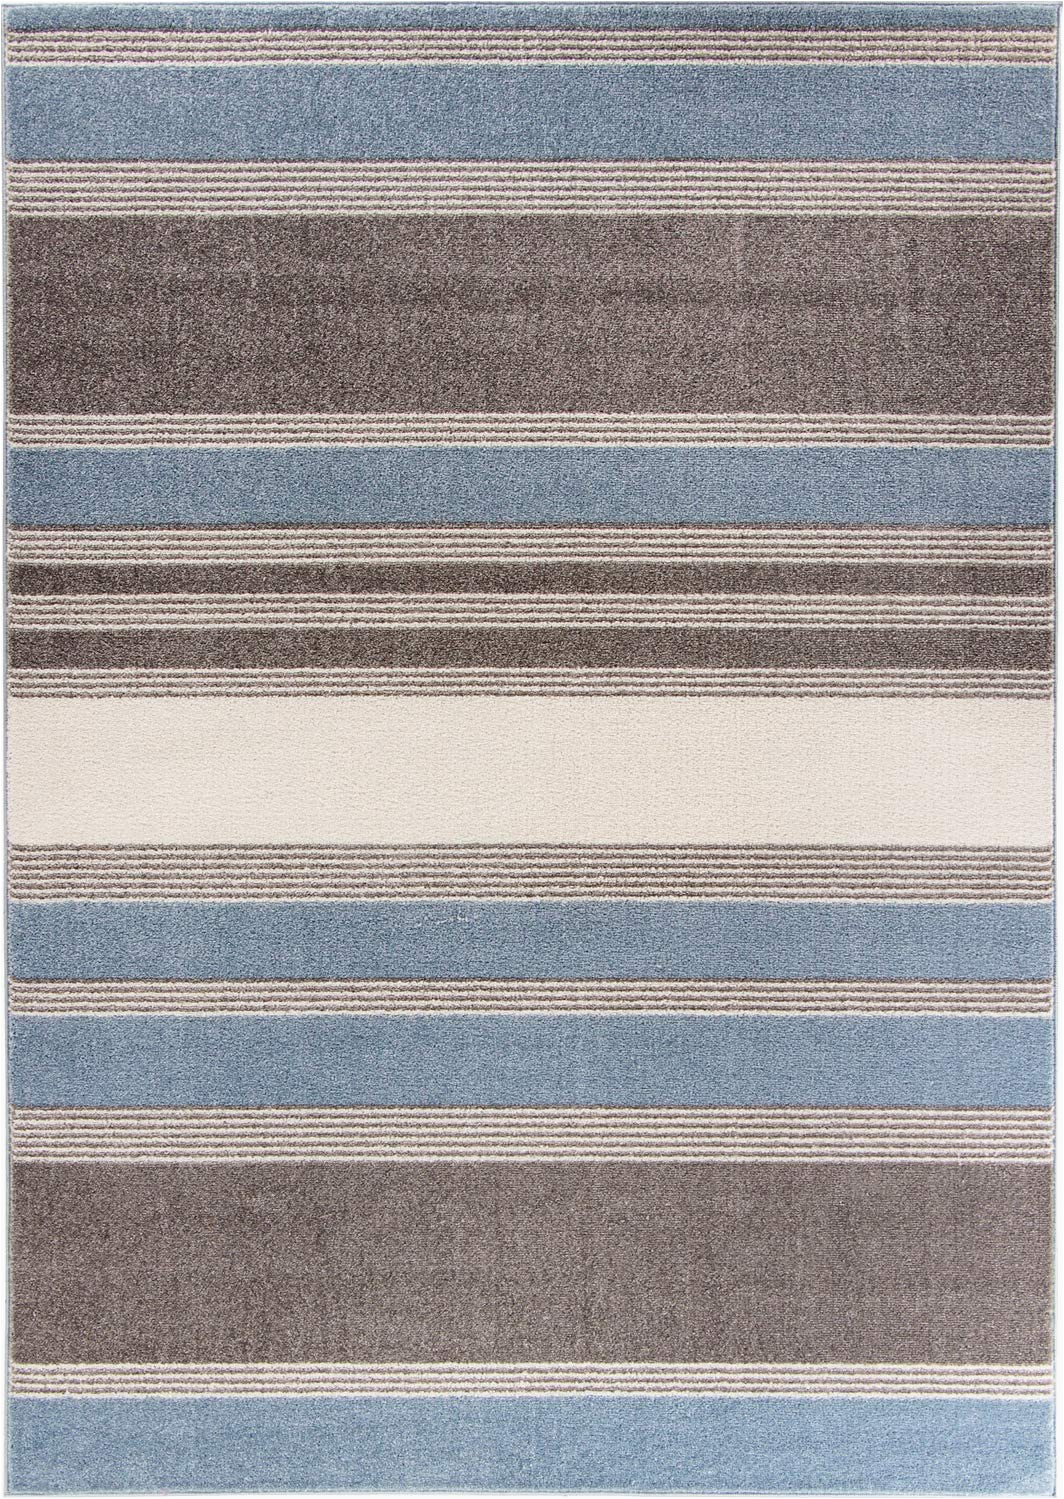 Blue and Cream Striped Rug Carpetforyou Designer Modern Short Pile Rug Blue Stripes